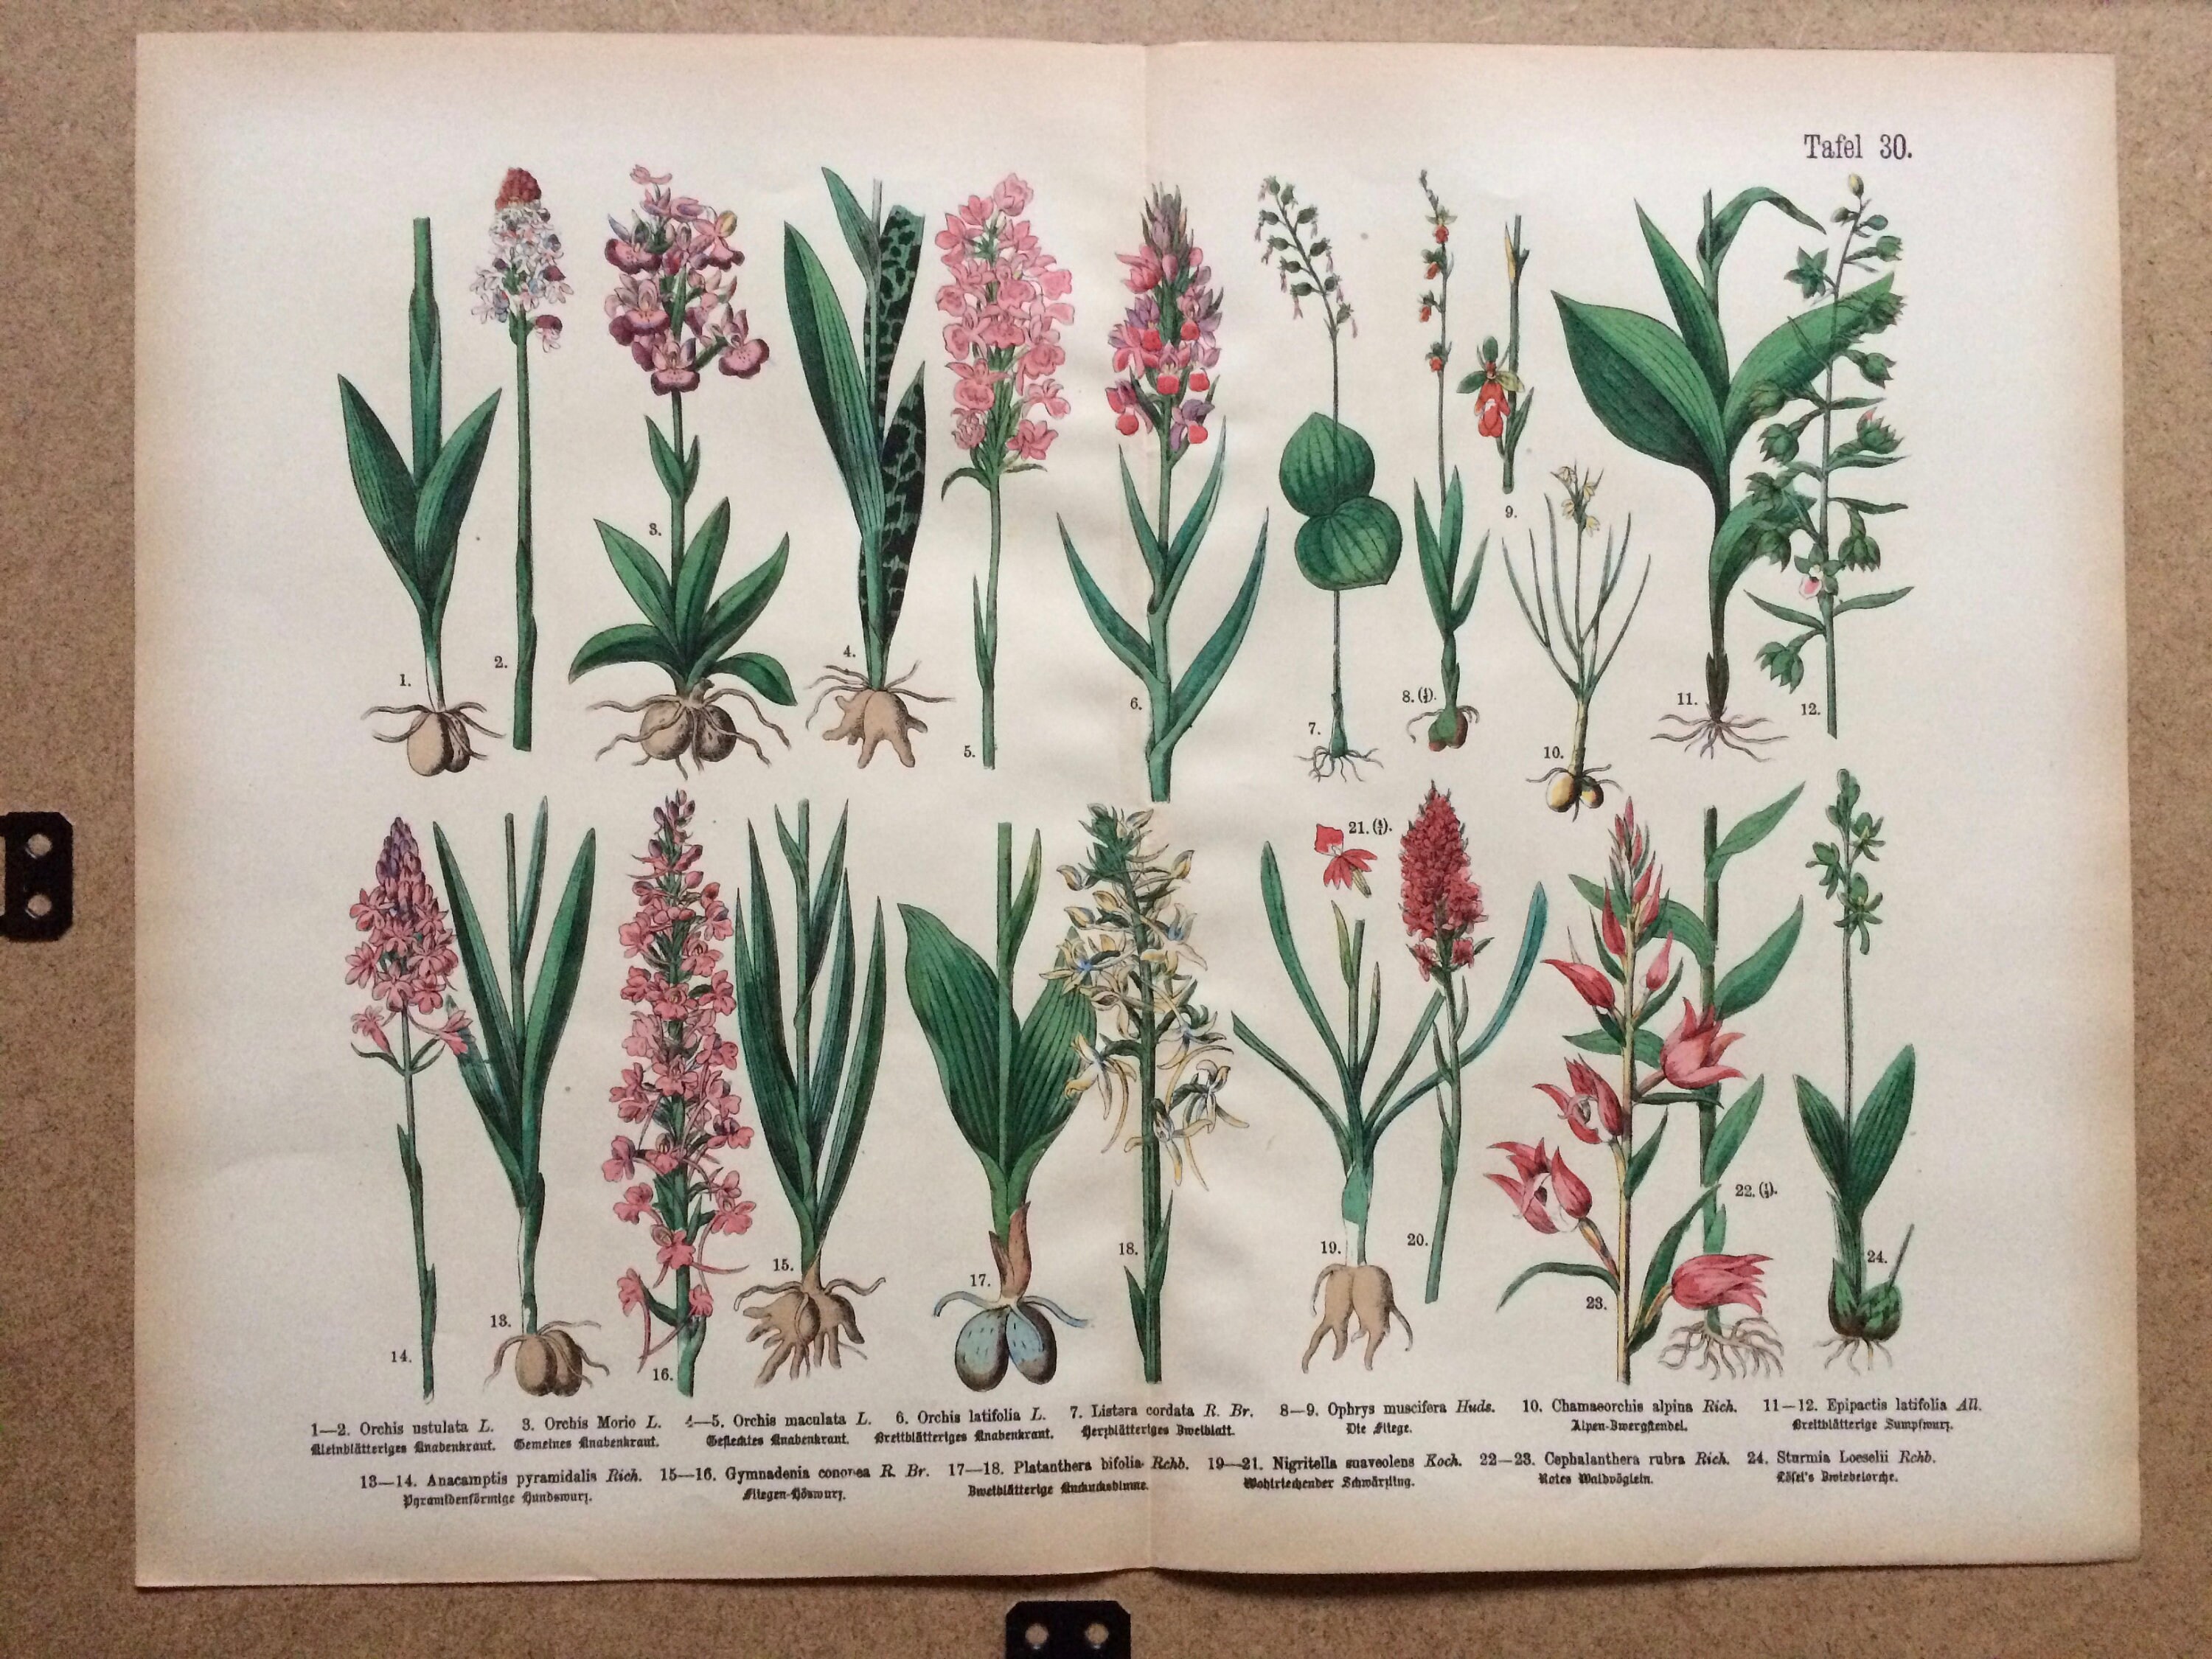 1890 Large Original Antique Botanical Lithograph Botanical Print